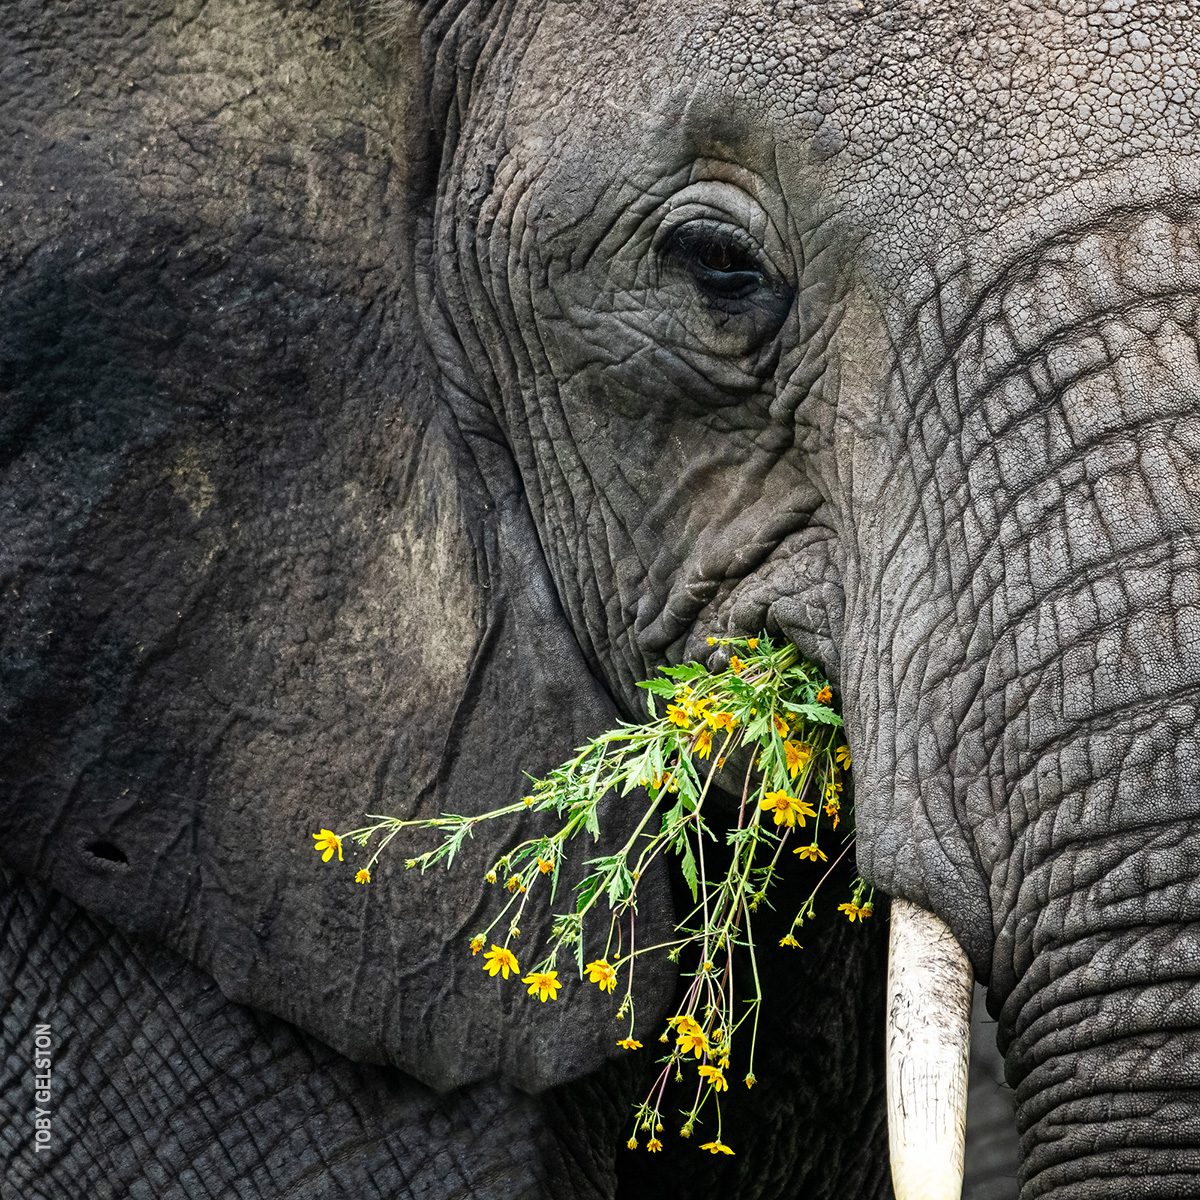 elephant closeup with flowers